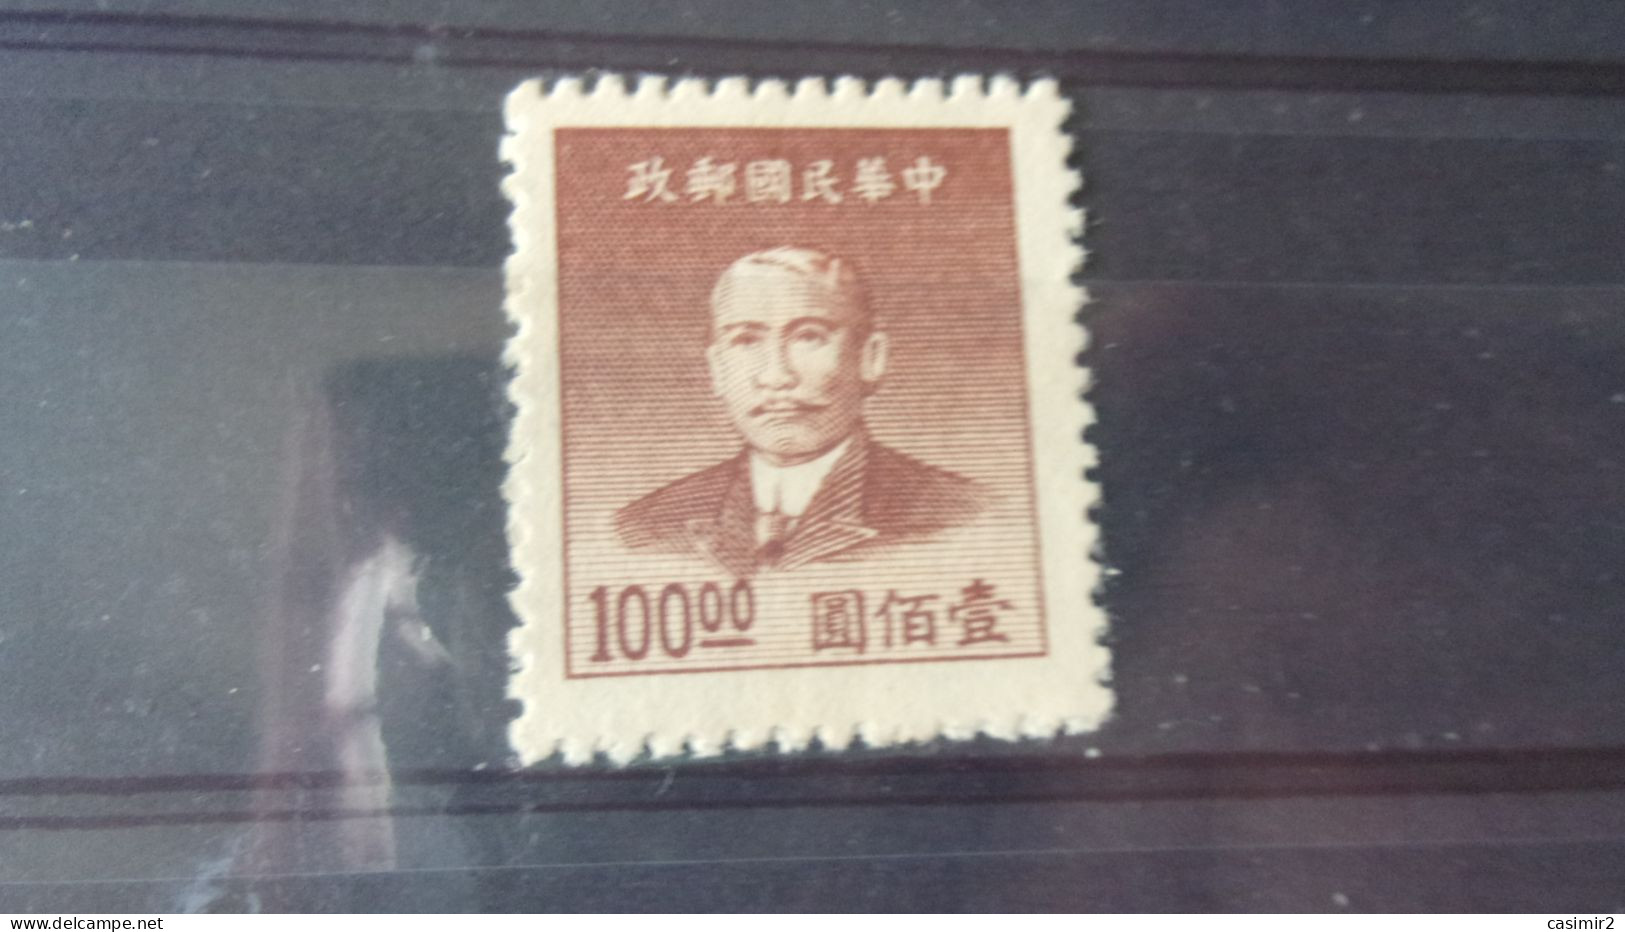 CHINE   YVERT N° 725 - 1912-1949 Republik